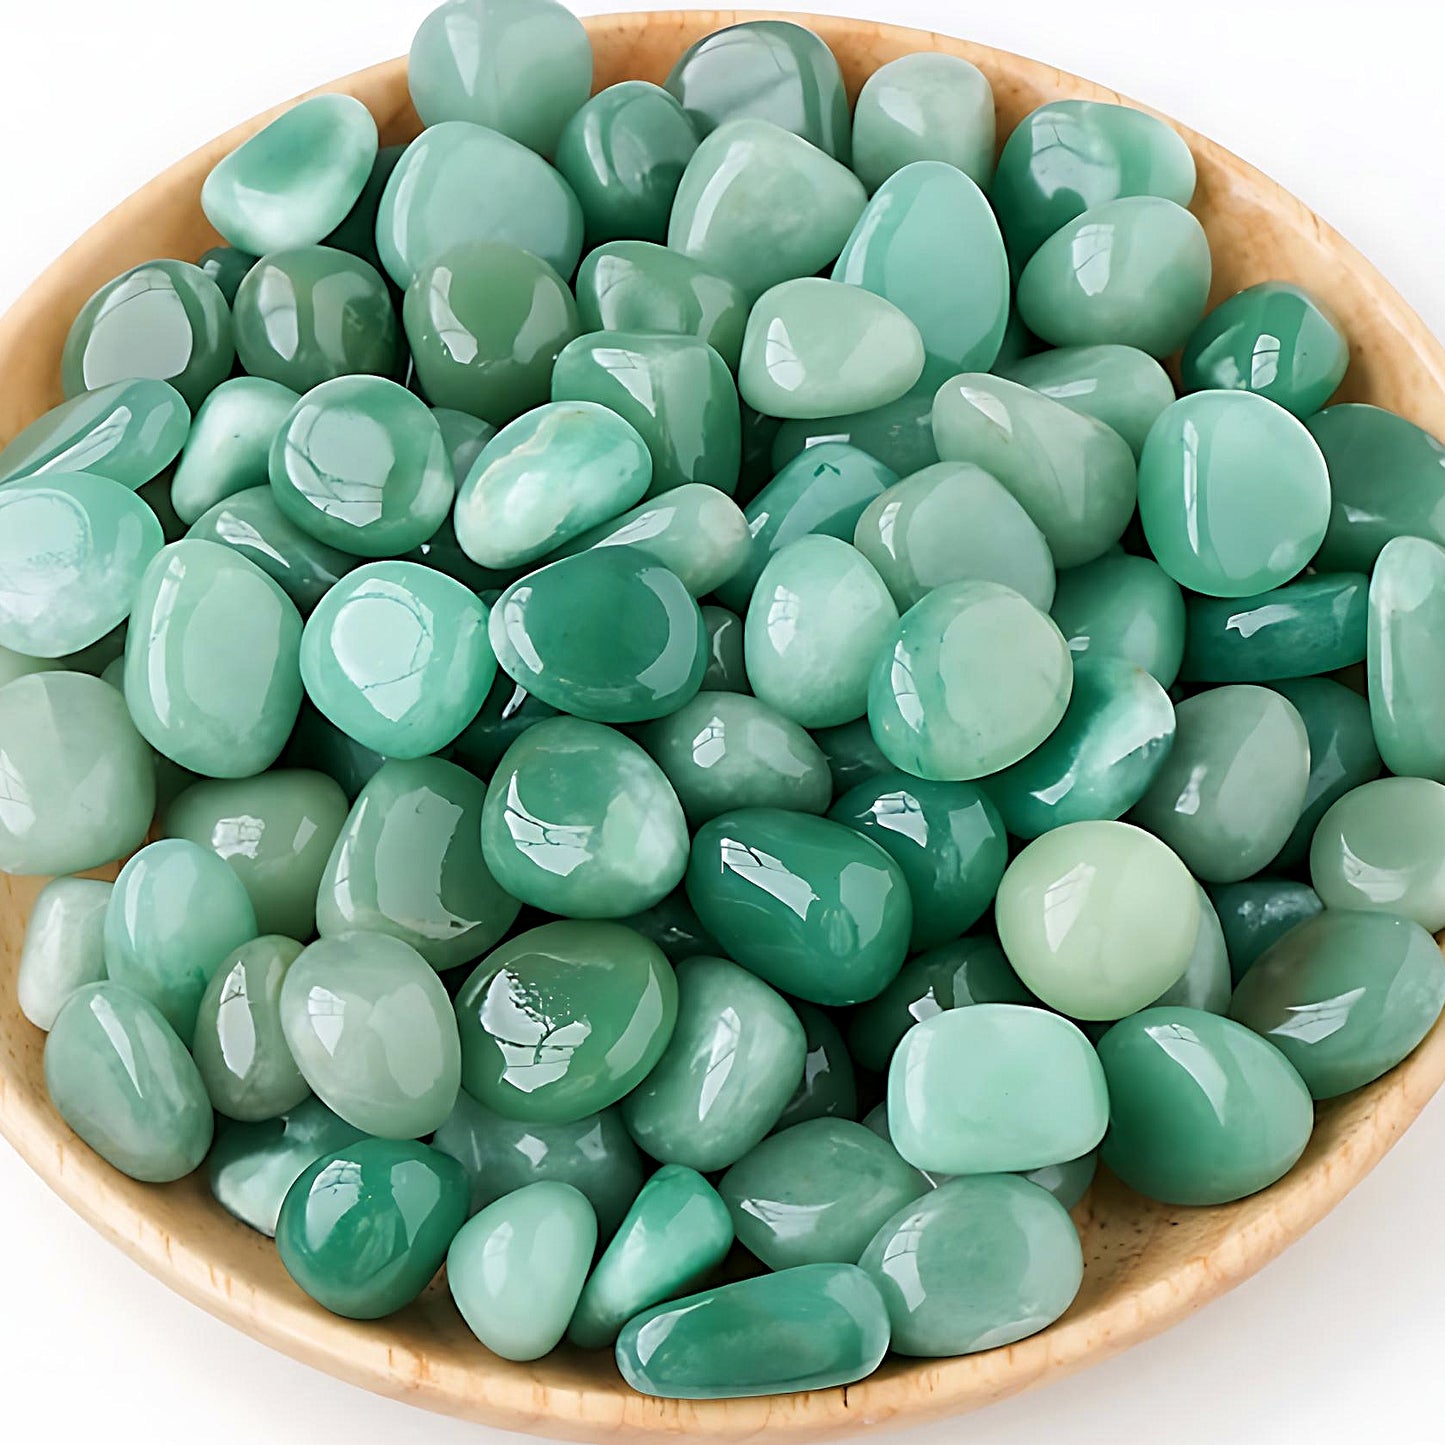 semi-precious tumbled stones in a bamboo bowl: green aventurine